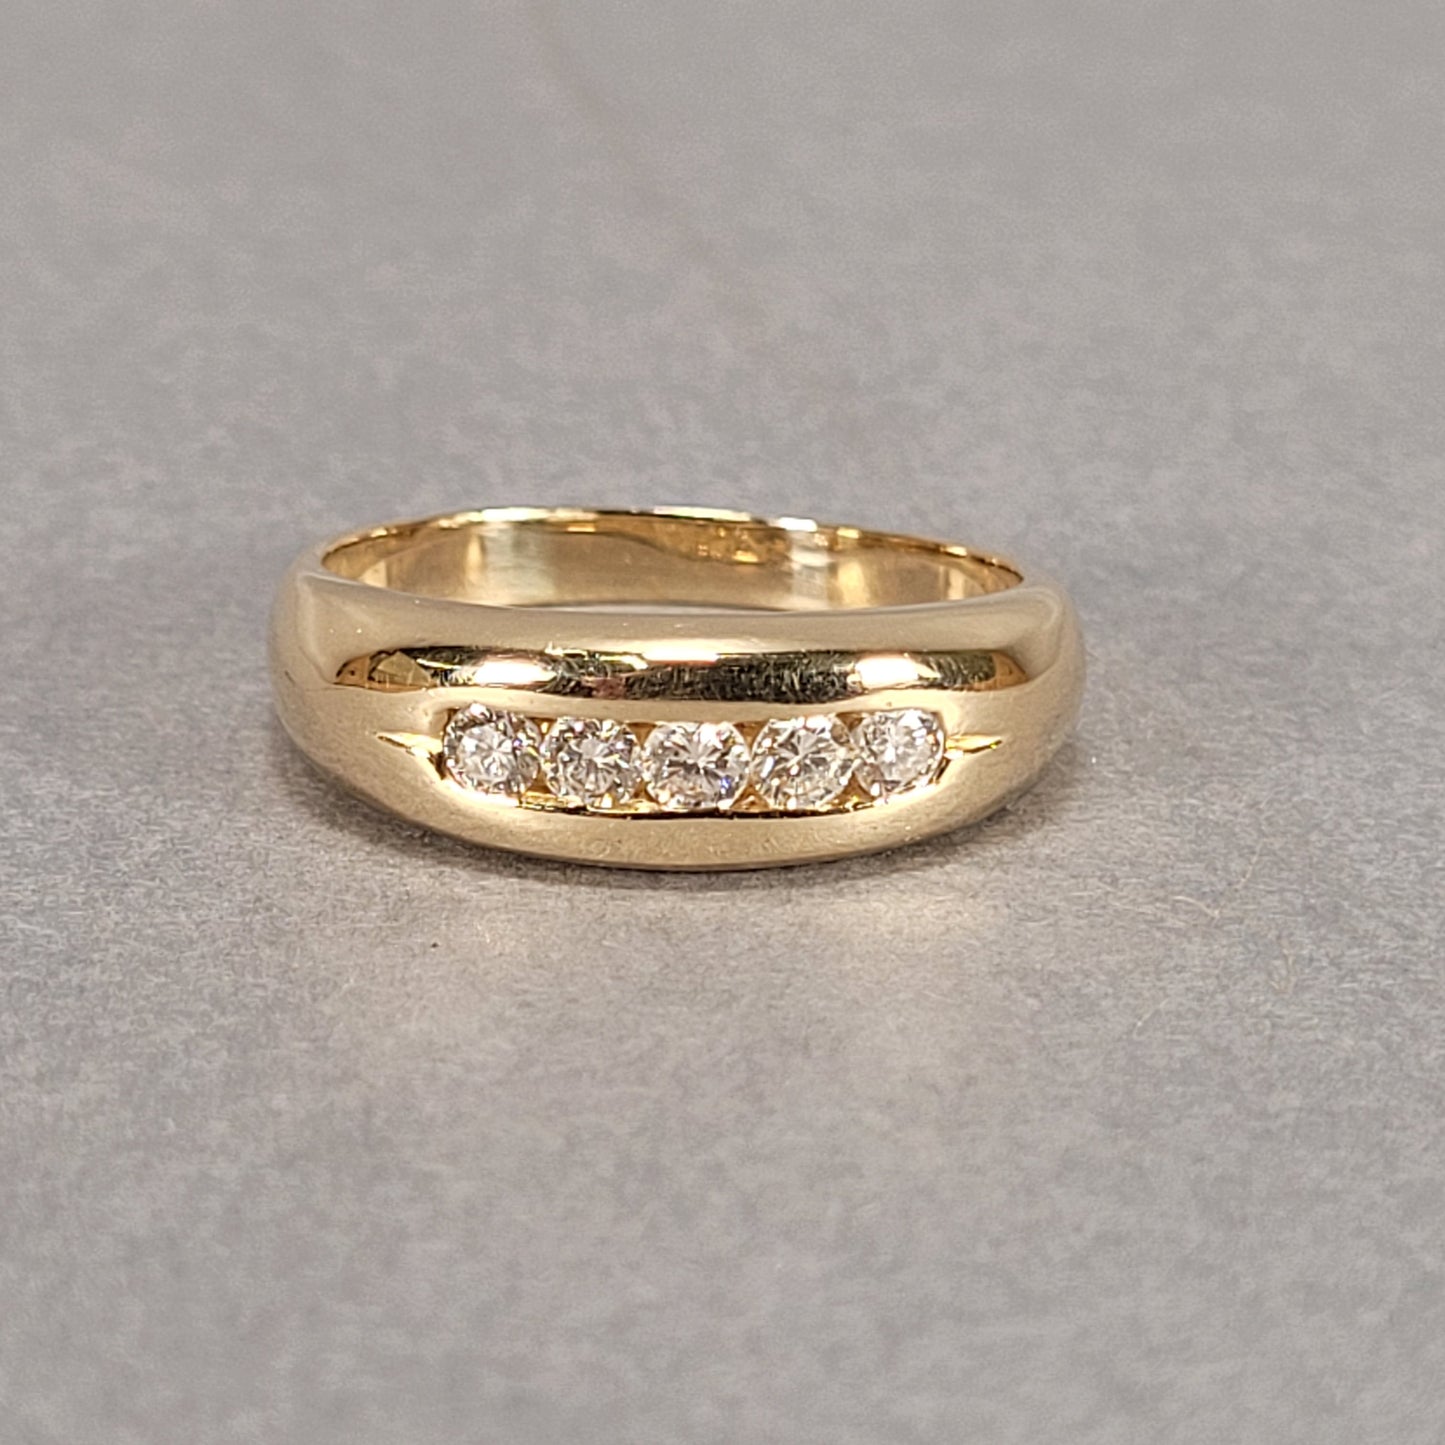 Men's 14k Yellow Gold Ring With Diamonds 7g